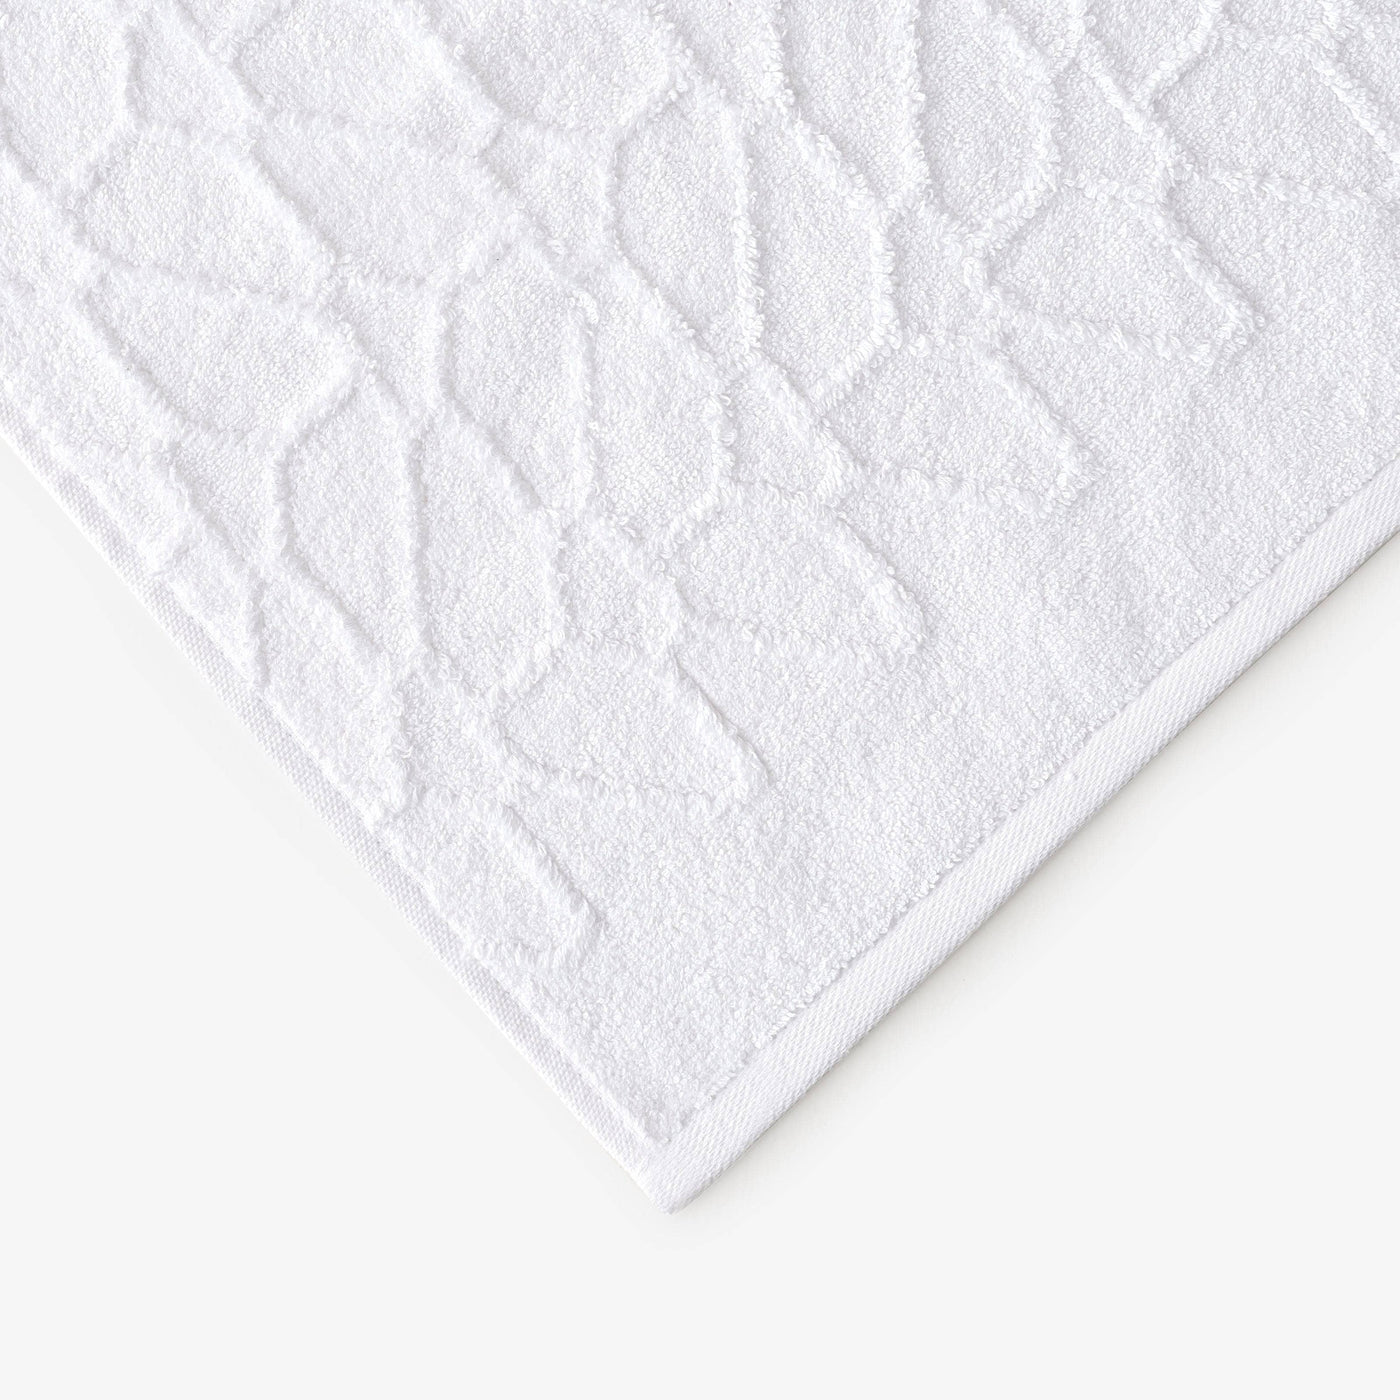 Harry Set of 2 Jacquard 100% Turkish Cotton Hand Towel, White, 50x90 cm 3